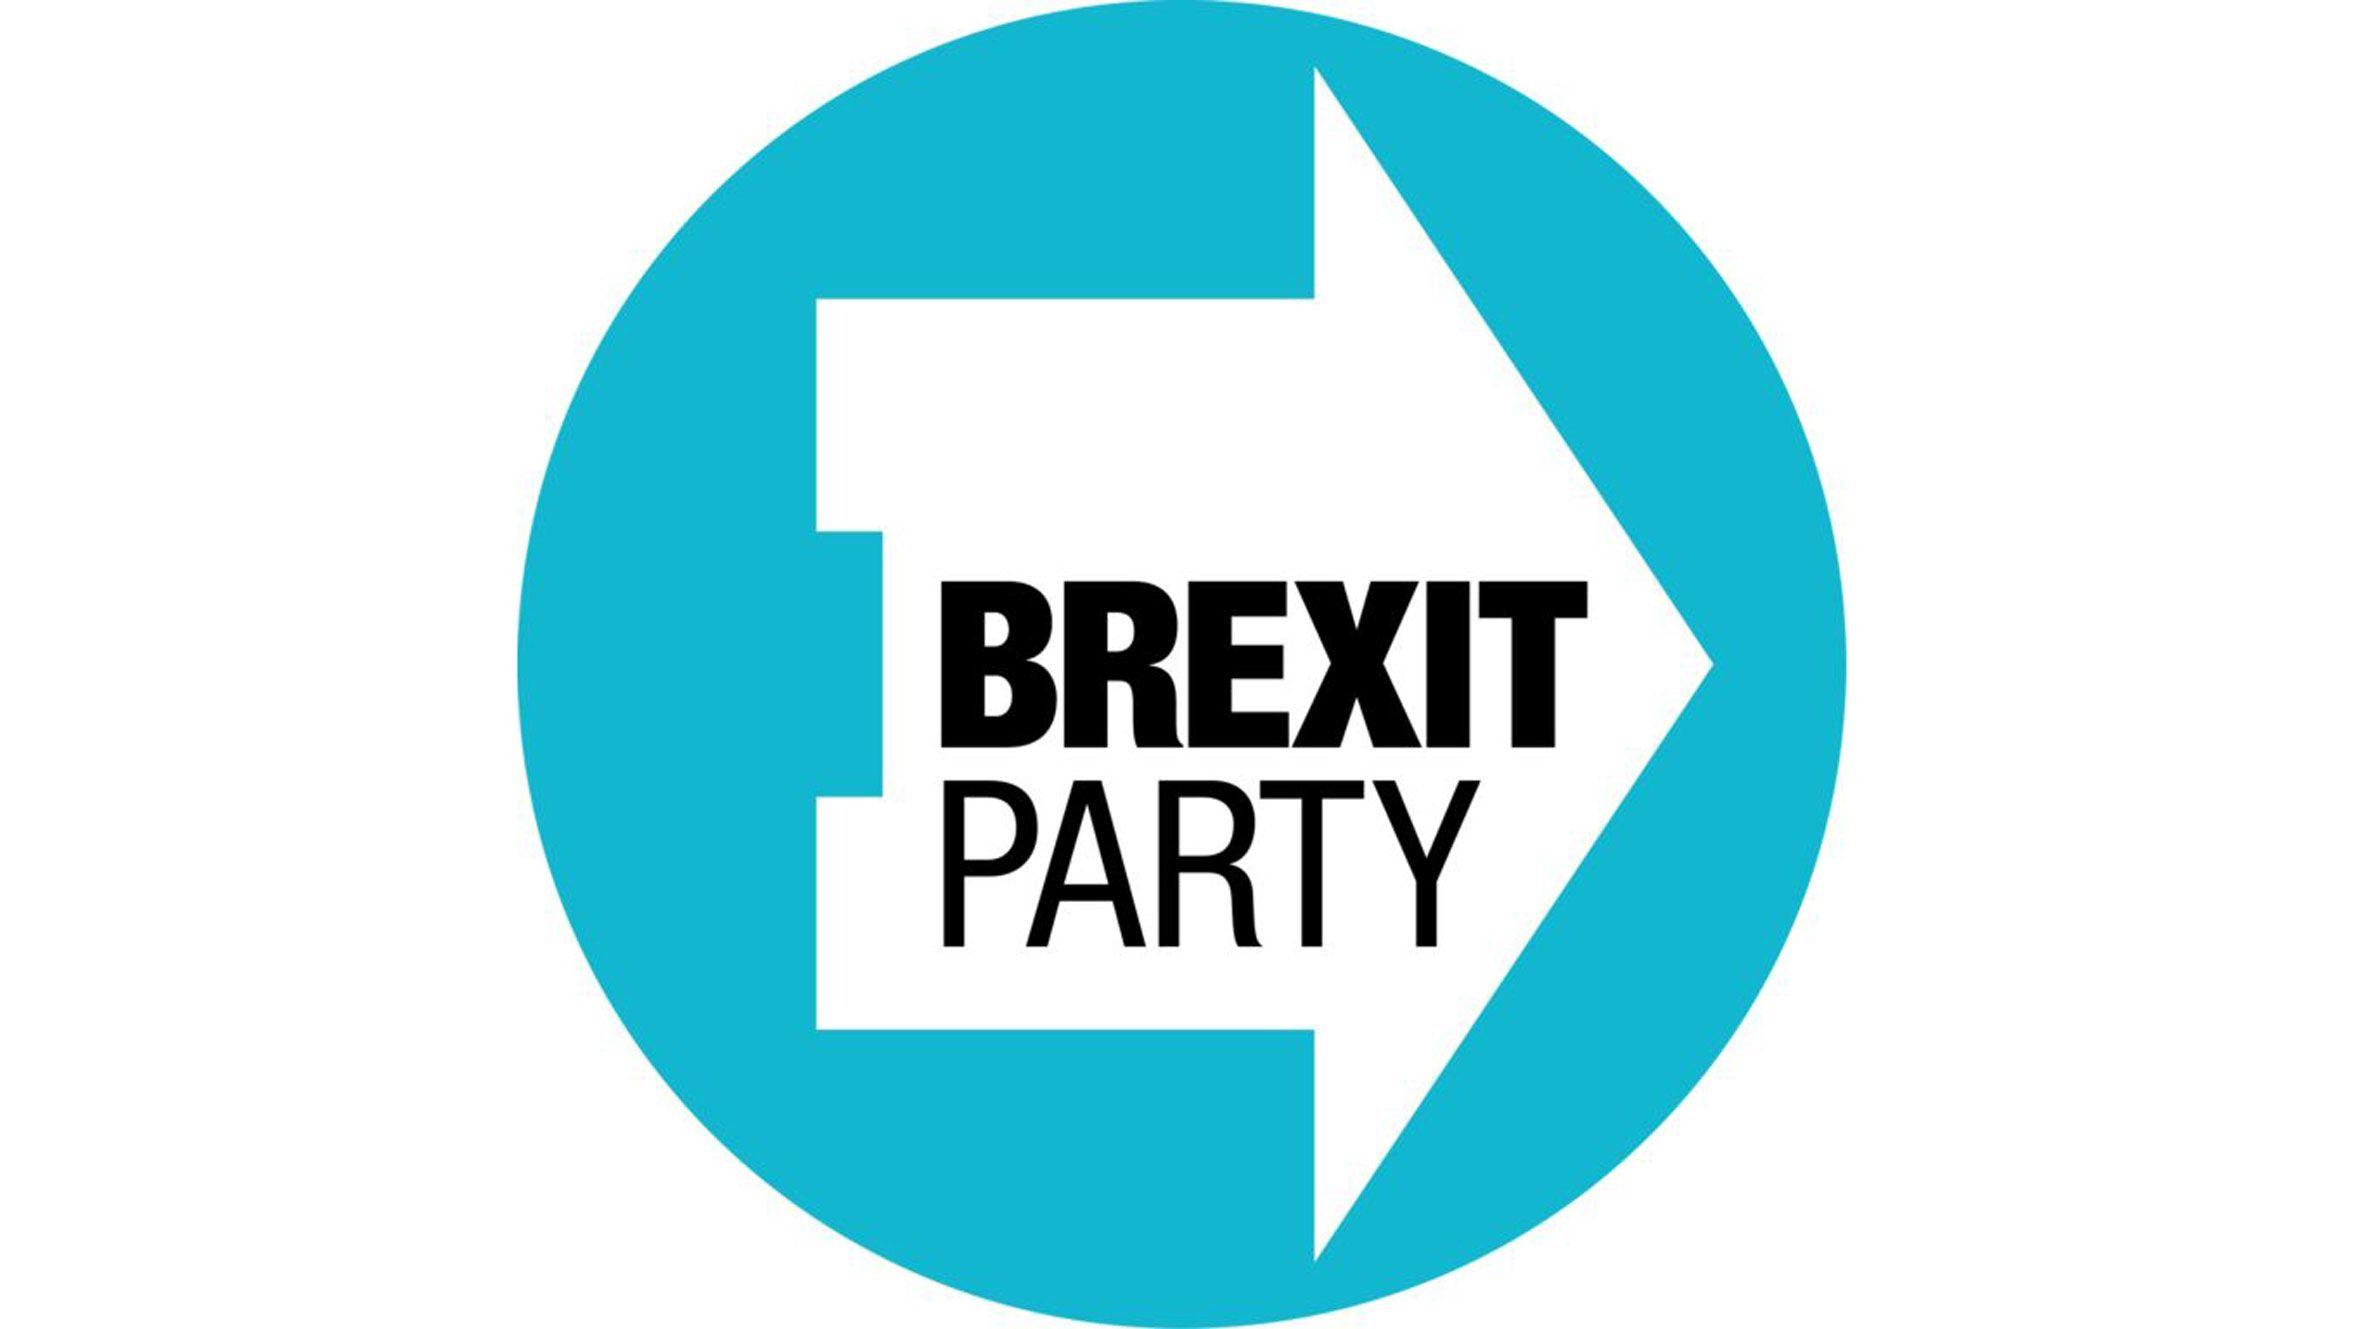 Ukip Logo - Brexit Party logo is 